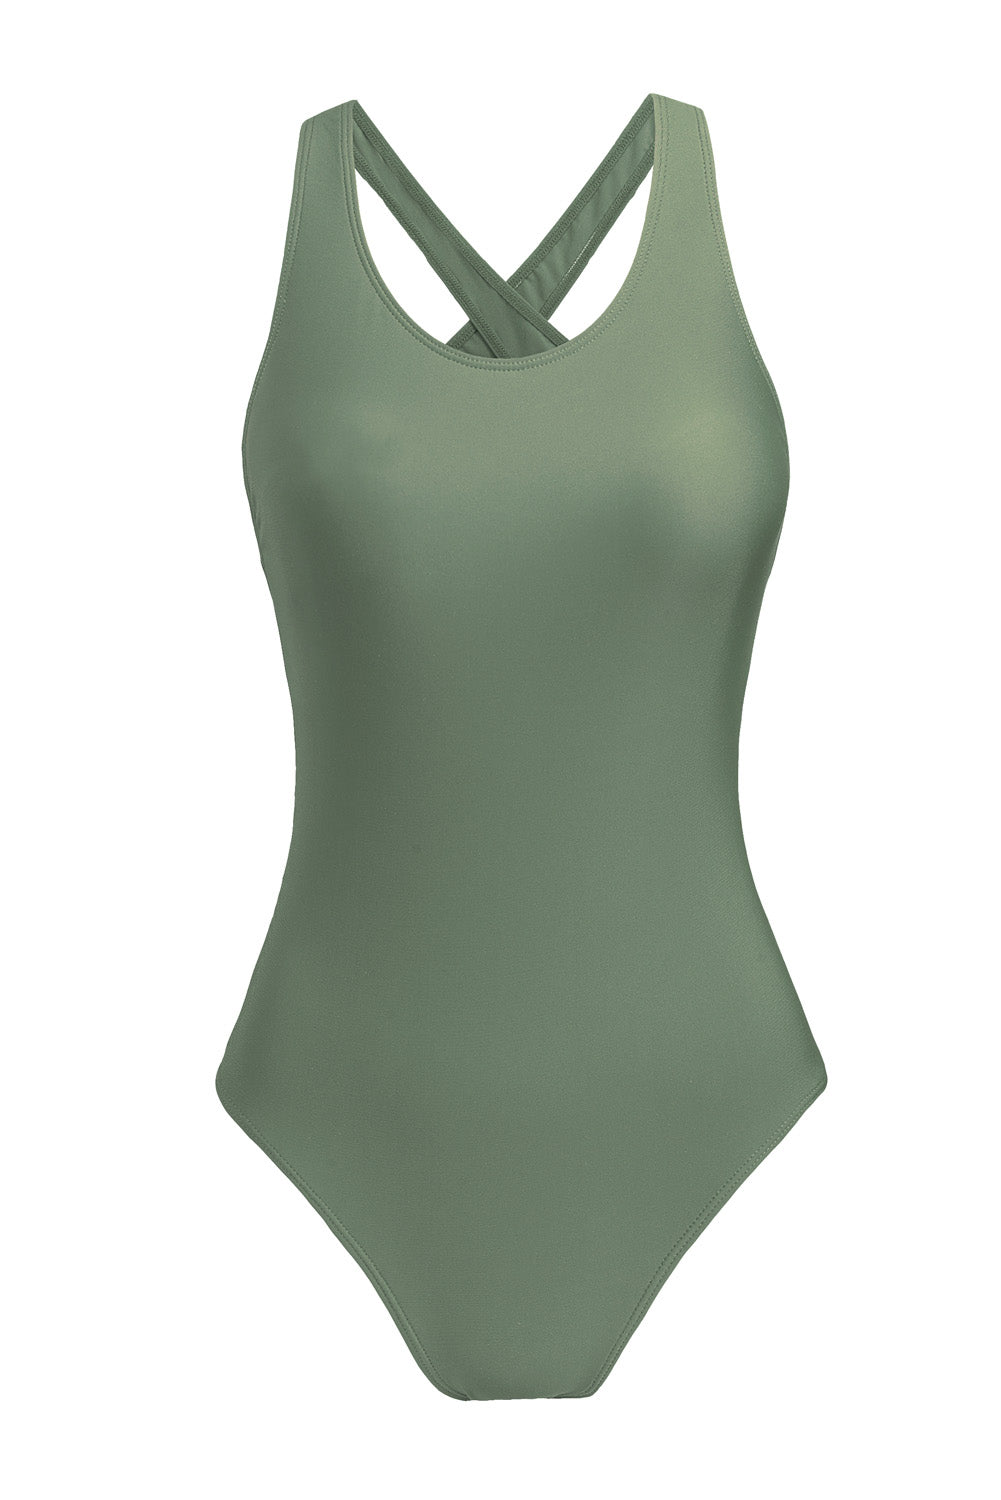 LC443470-9-S, LC443470-9-M, LC443470-9-L, LC443470-9-XL, LC443470-9-2XL, Green Women's Cross Back Swimwear High Cut One Piece Bathing Suits Swimsuit